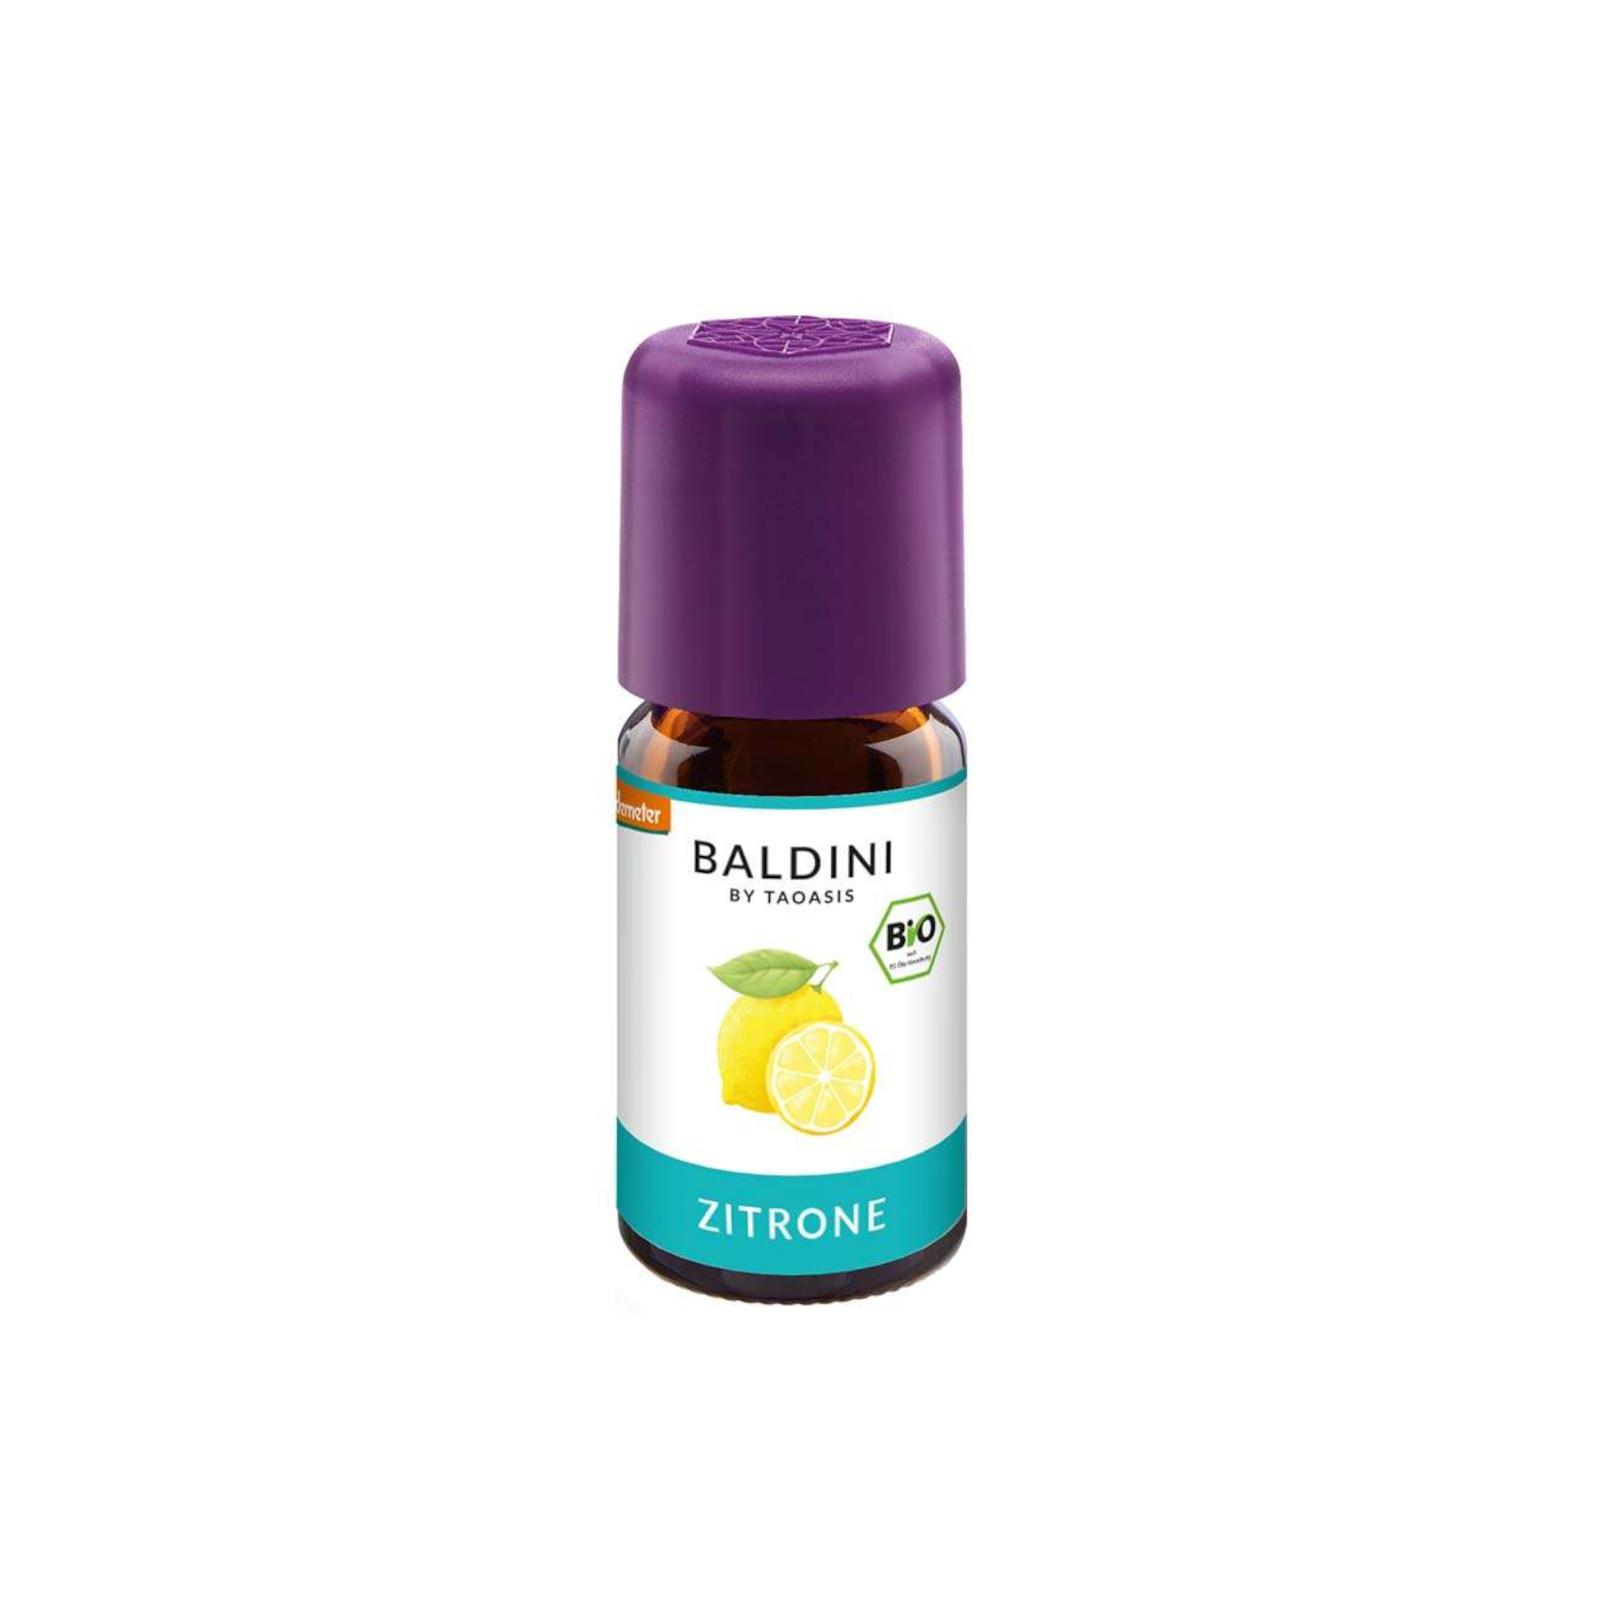 Taoasis Citron Baldini, Bio Demeter 5 ml